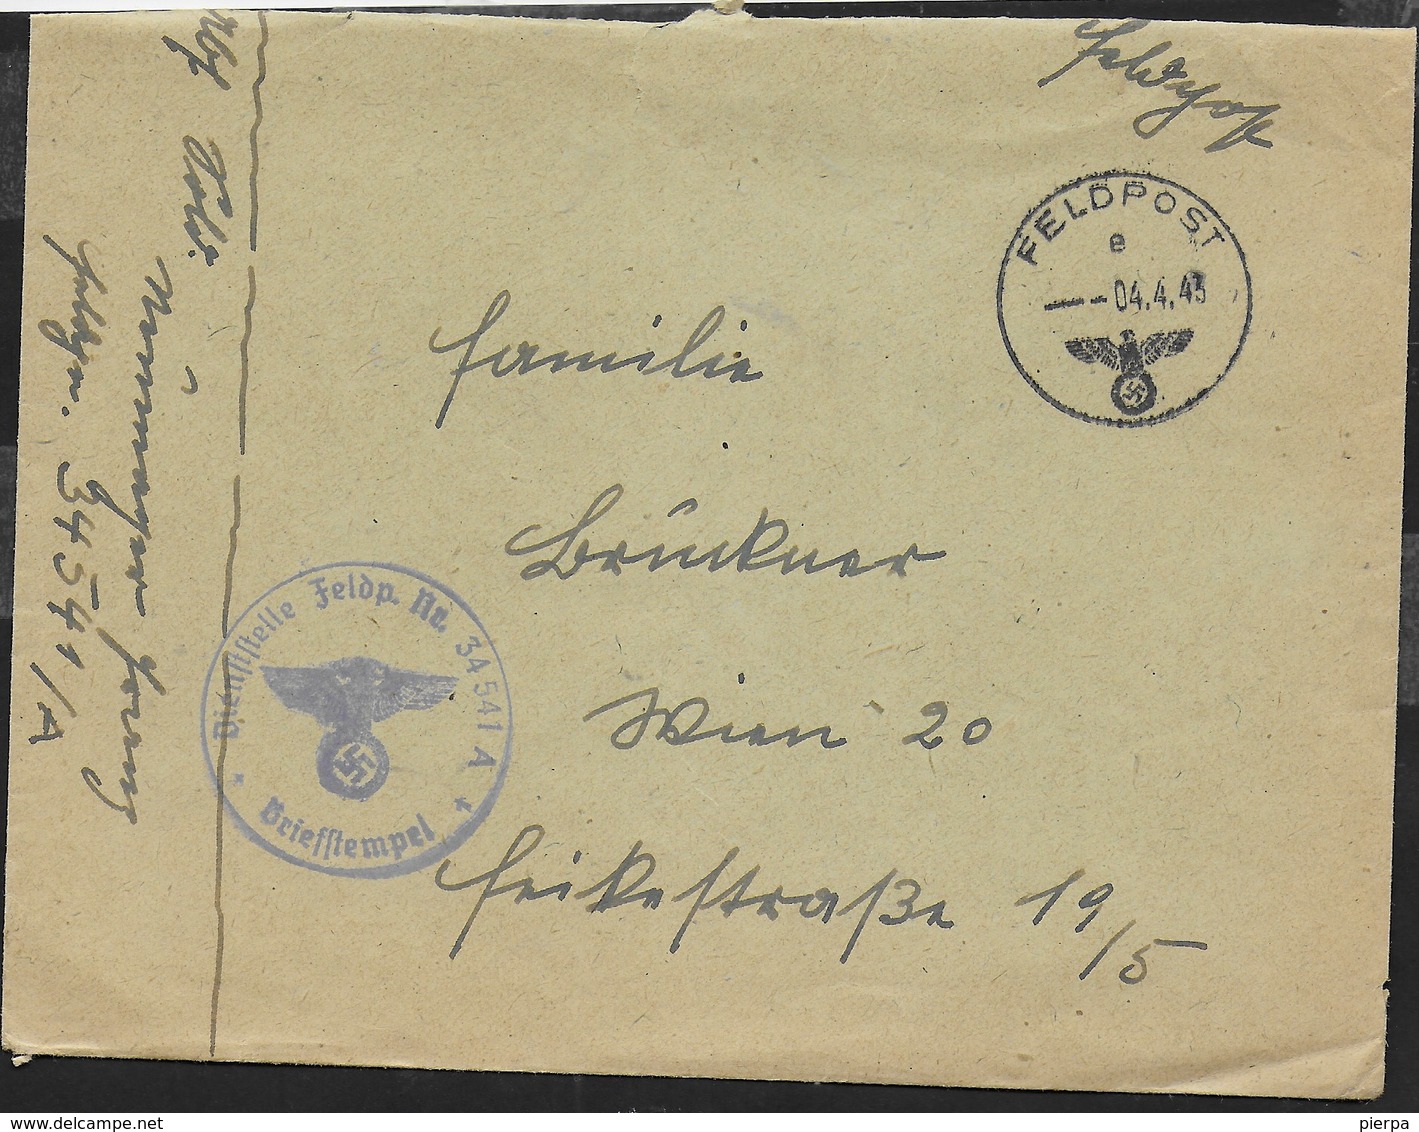 FELDPOST E 04.04.1943 - TIMBRO DIENSTSTELLE FELDP. Nr. 34541 A*BRIEFSTEMPEL* SU BUSTA - Lettres & Documents